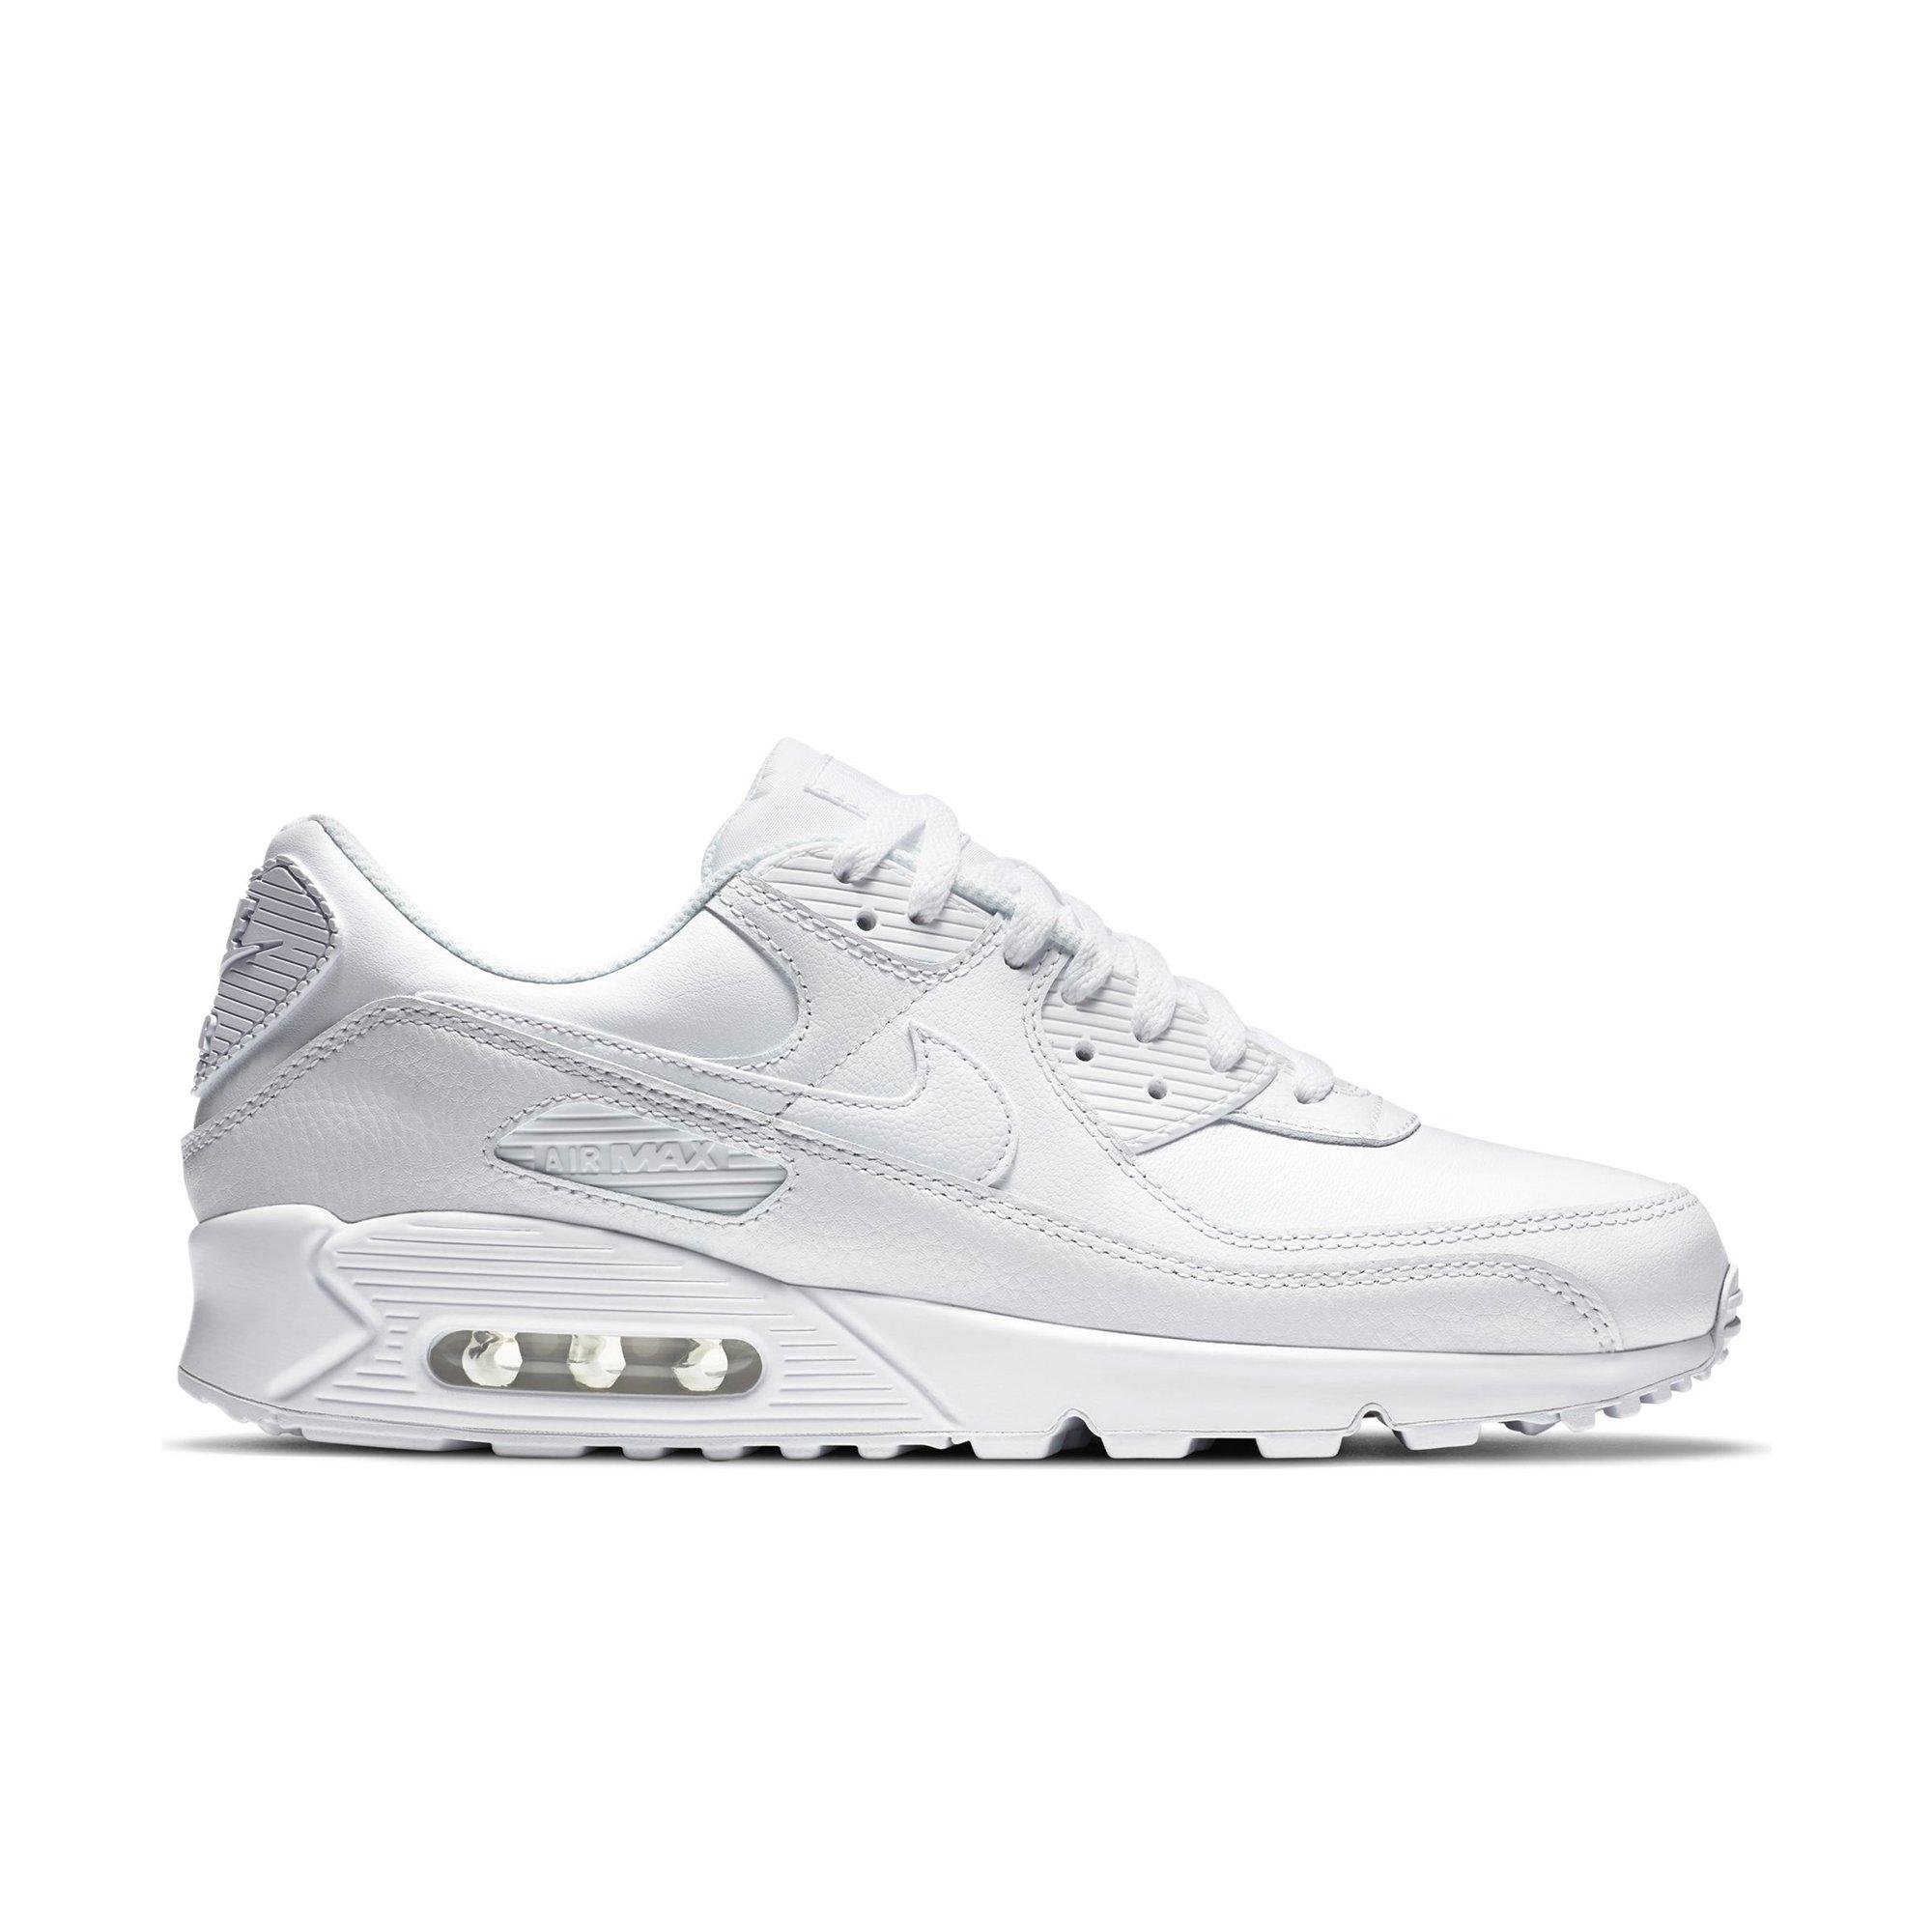 itself Oceania Becks Nike Air Max 90 Leather "White/White" Men's Shoe